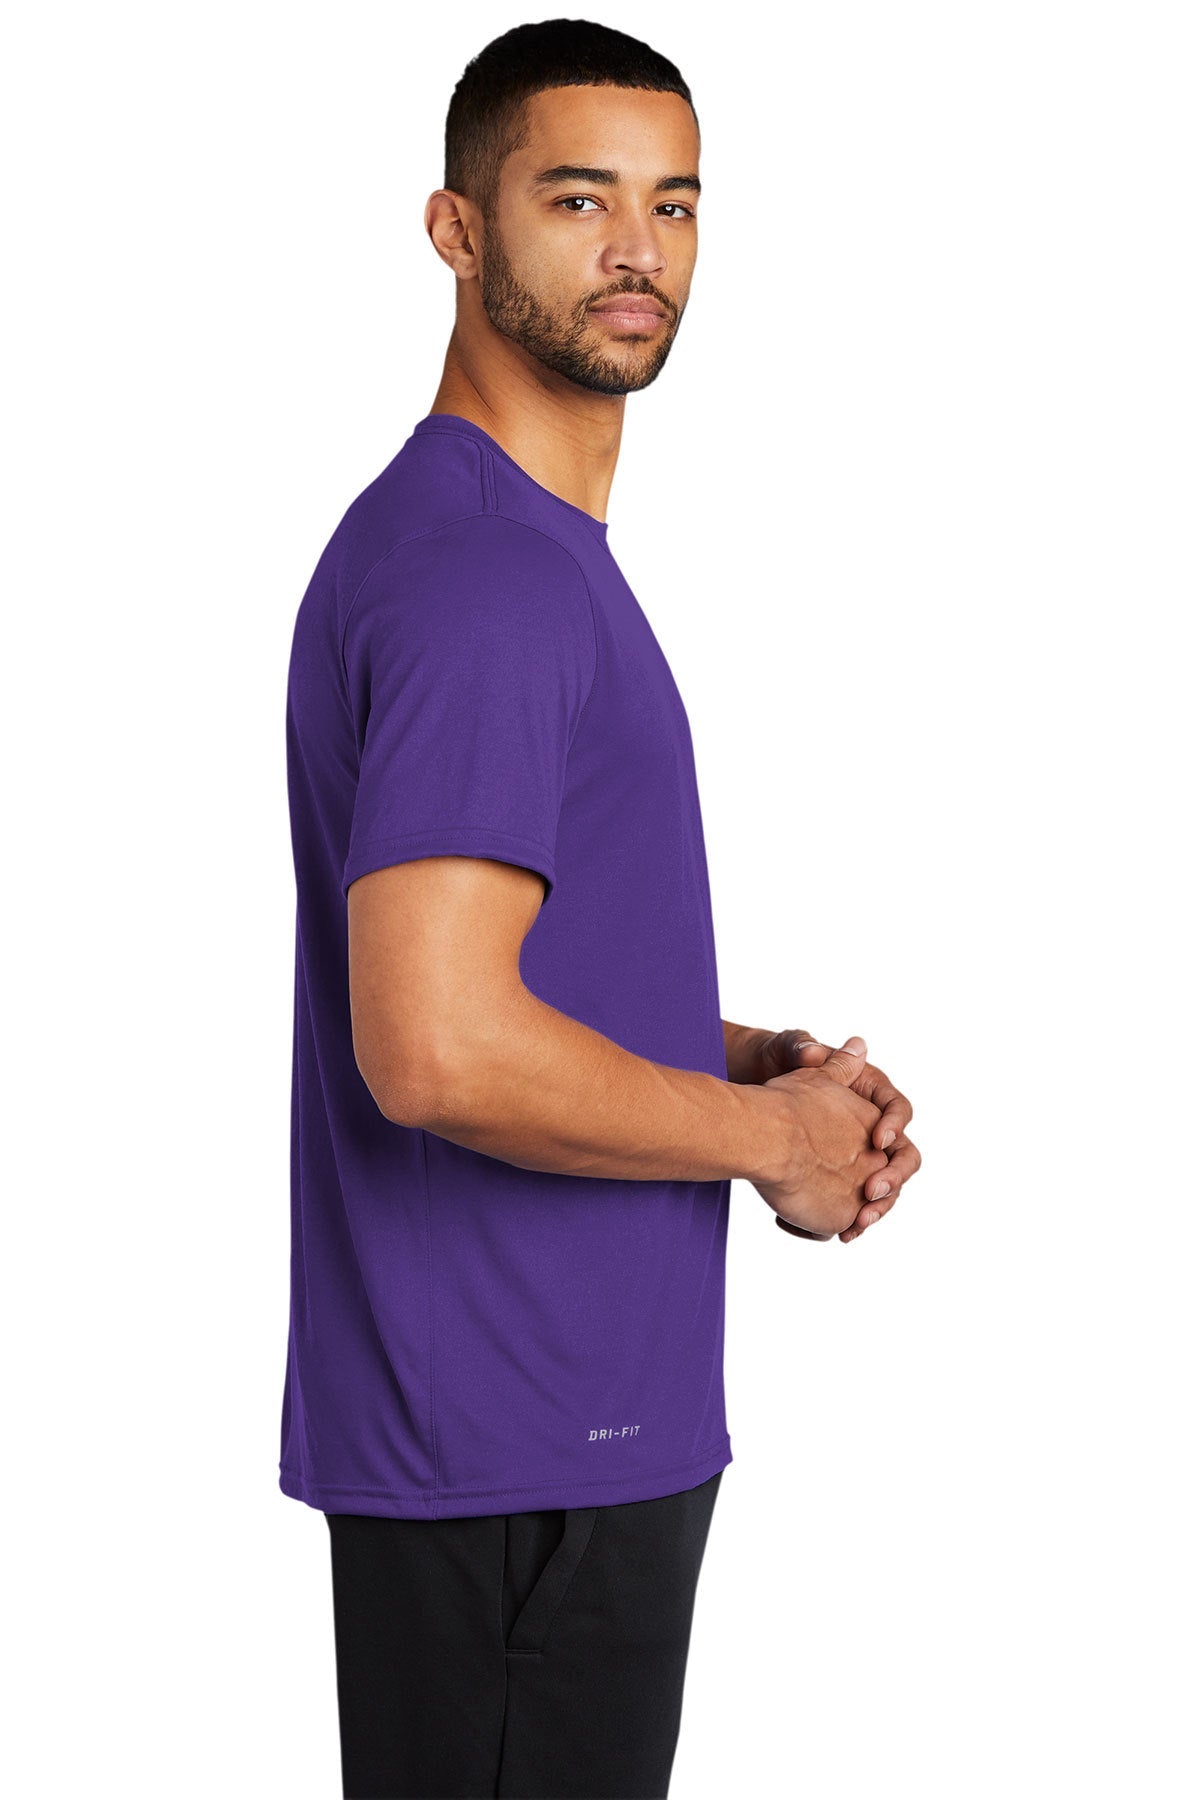 Nike Legend Customized T-Shirts, Court Purple